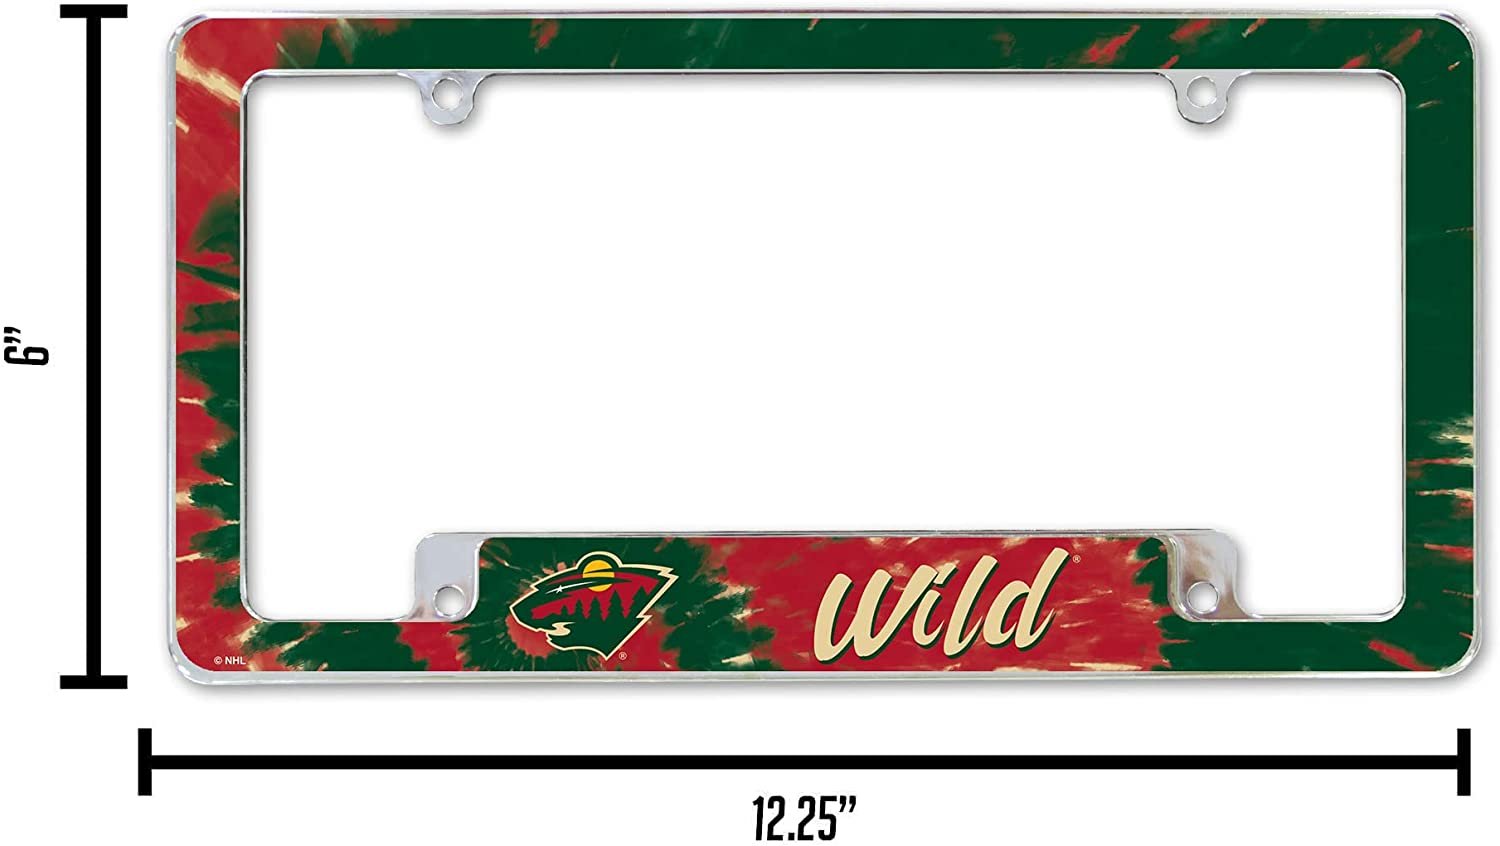 Minnesota Wild Metal License Plate Frame Chrome Tag Cover Tie Dye Design 6x12 Inch